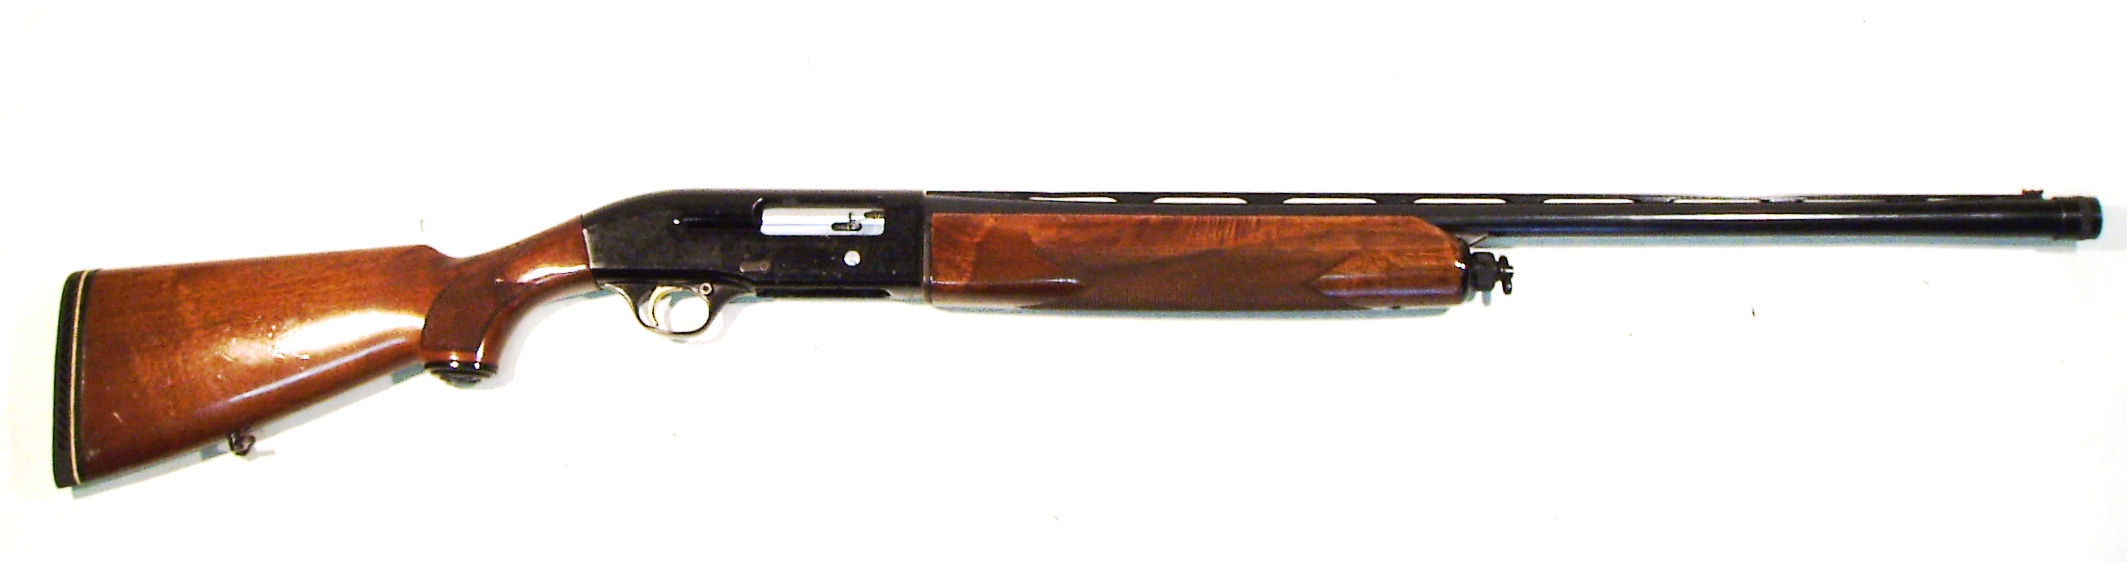 Escopeta BERETTA, modelo A302, calibre 12, nº F46003RE-0